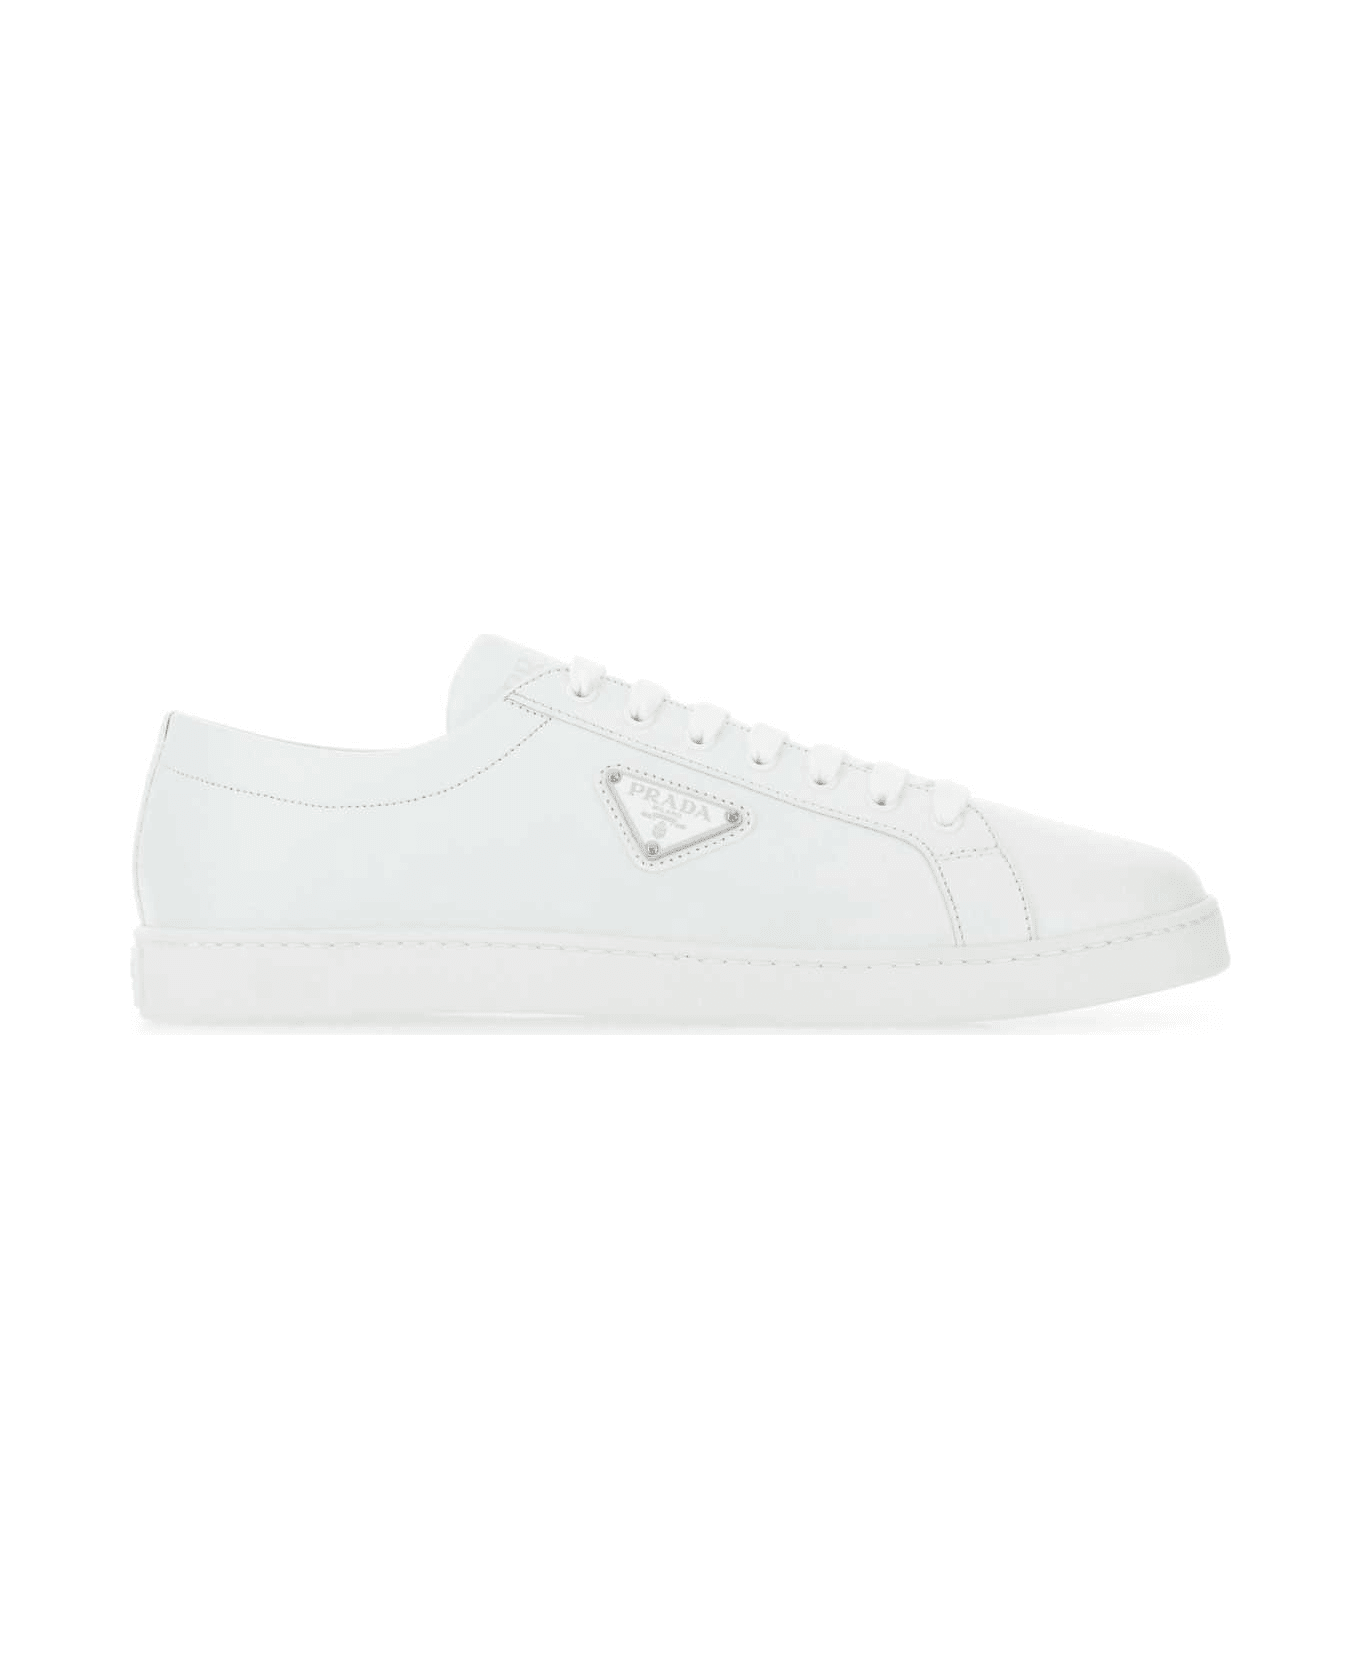 Prada White Leather Sneakers - F0009